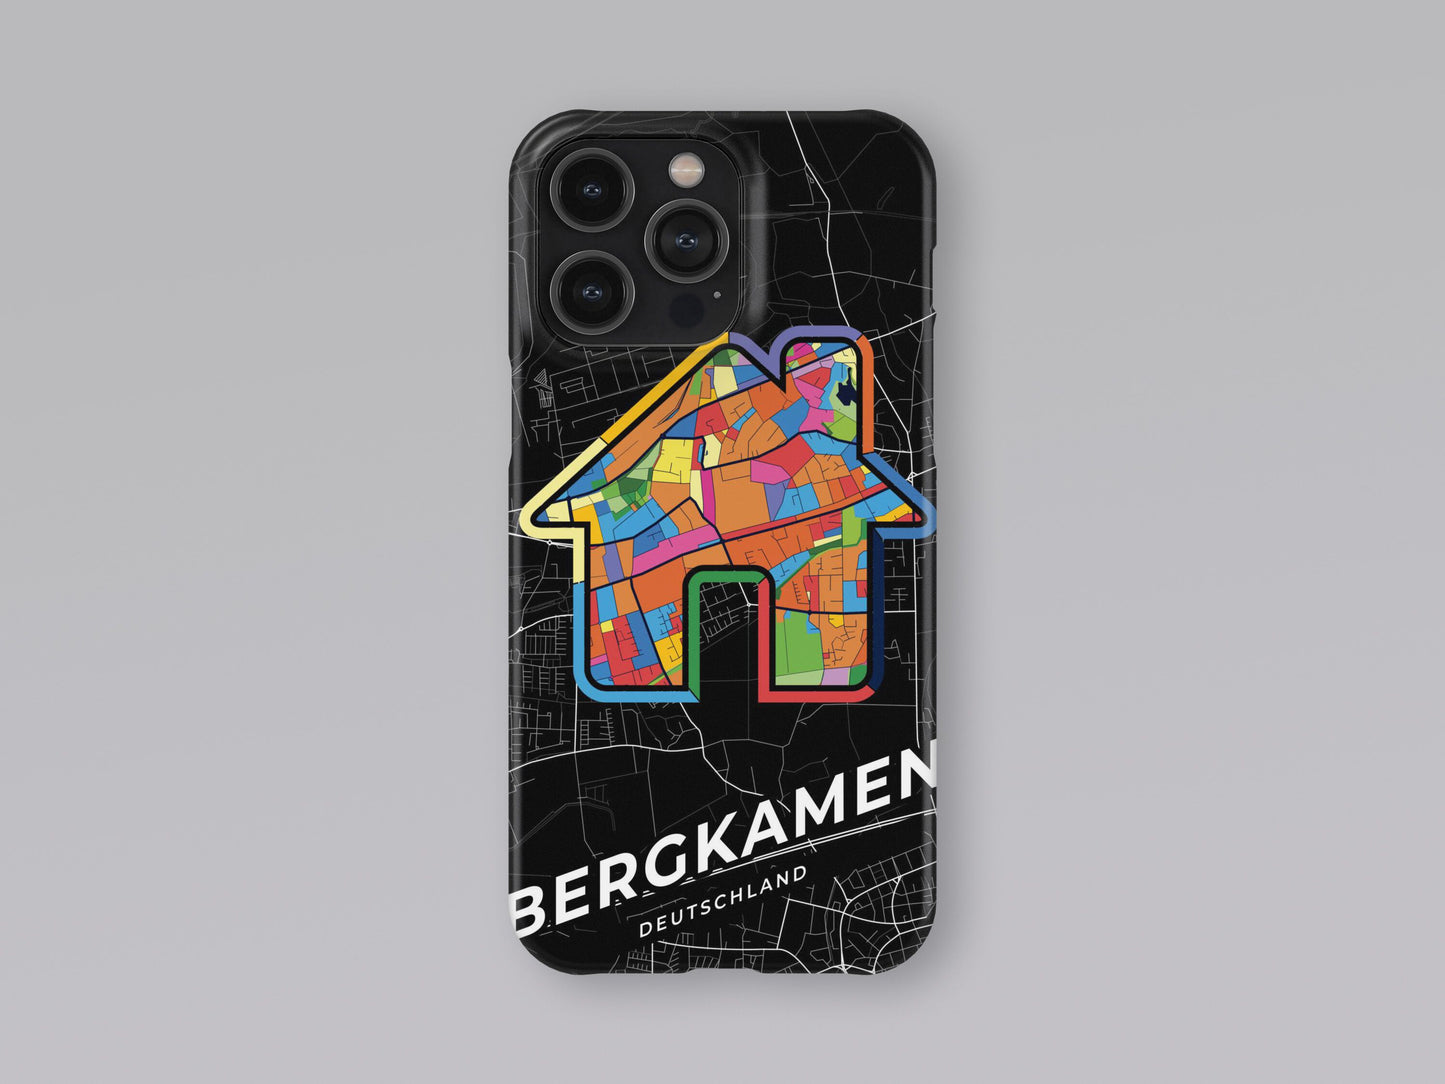 Bergkamen Deutschland slim phone case with colorful icon. Birthday, wedding or housewarming gift. Couple match cases. 3